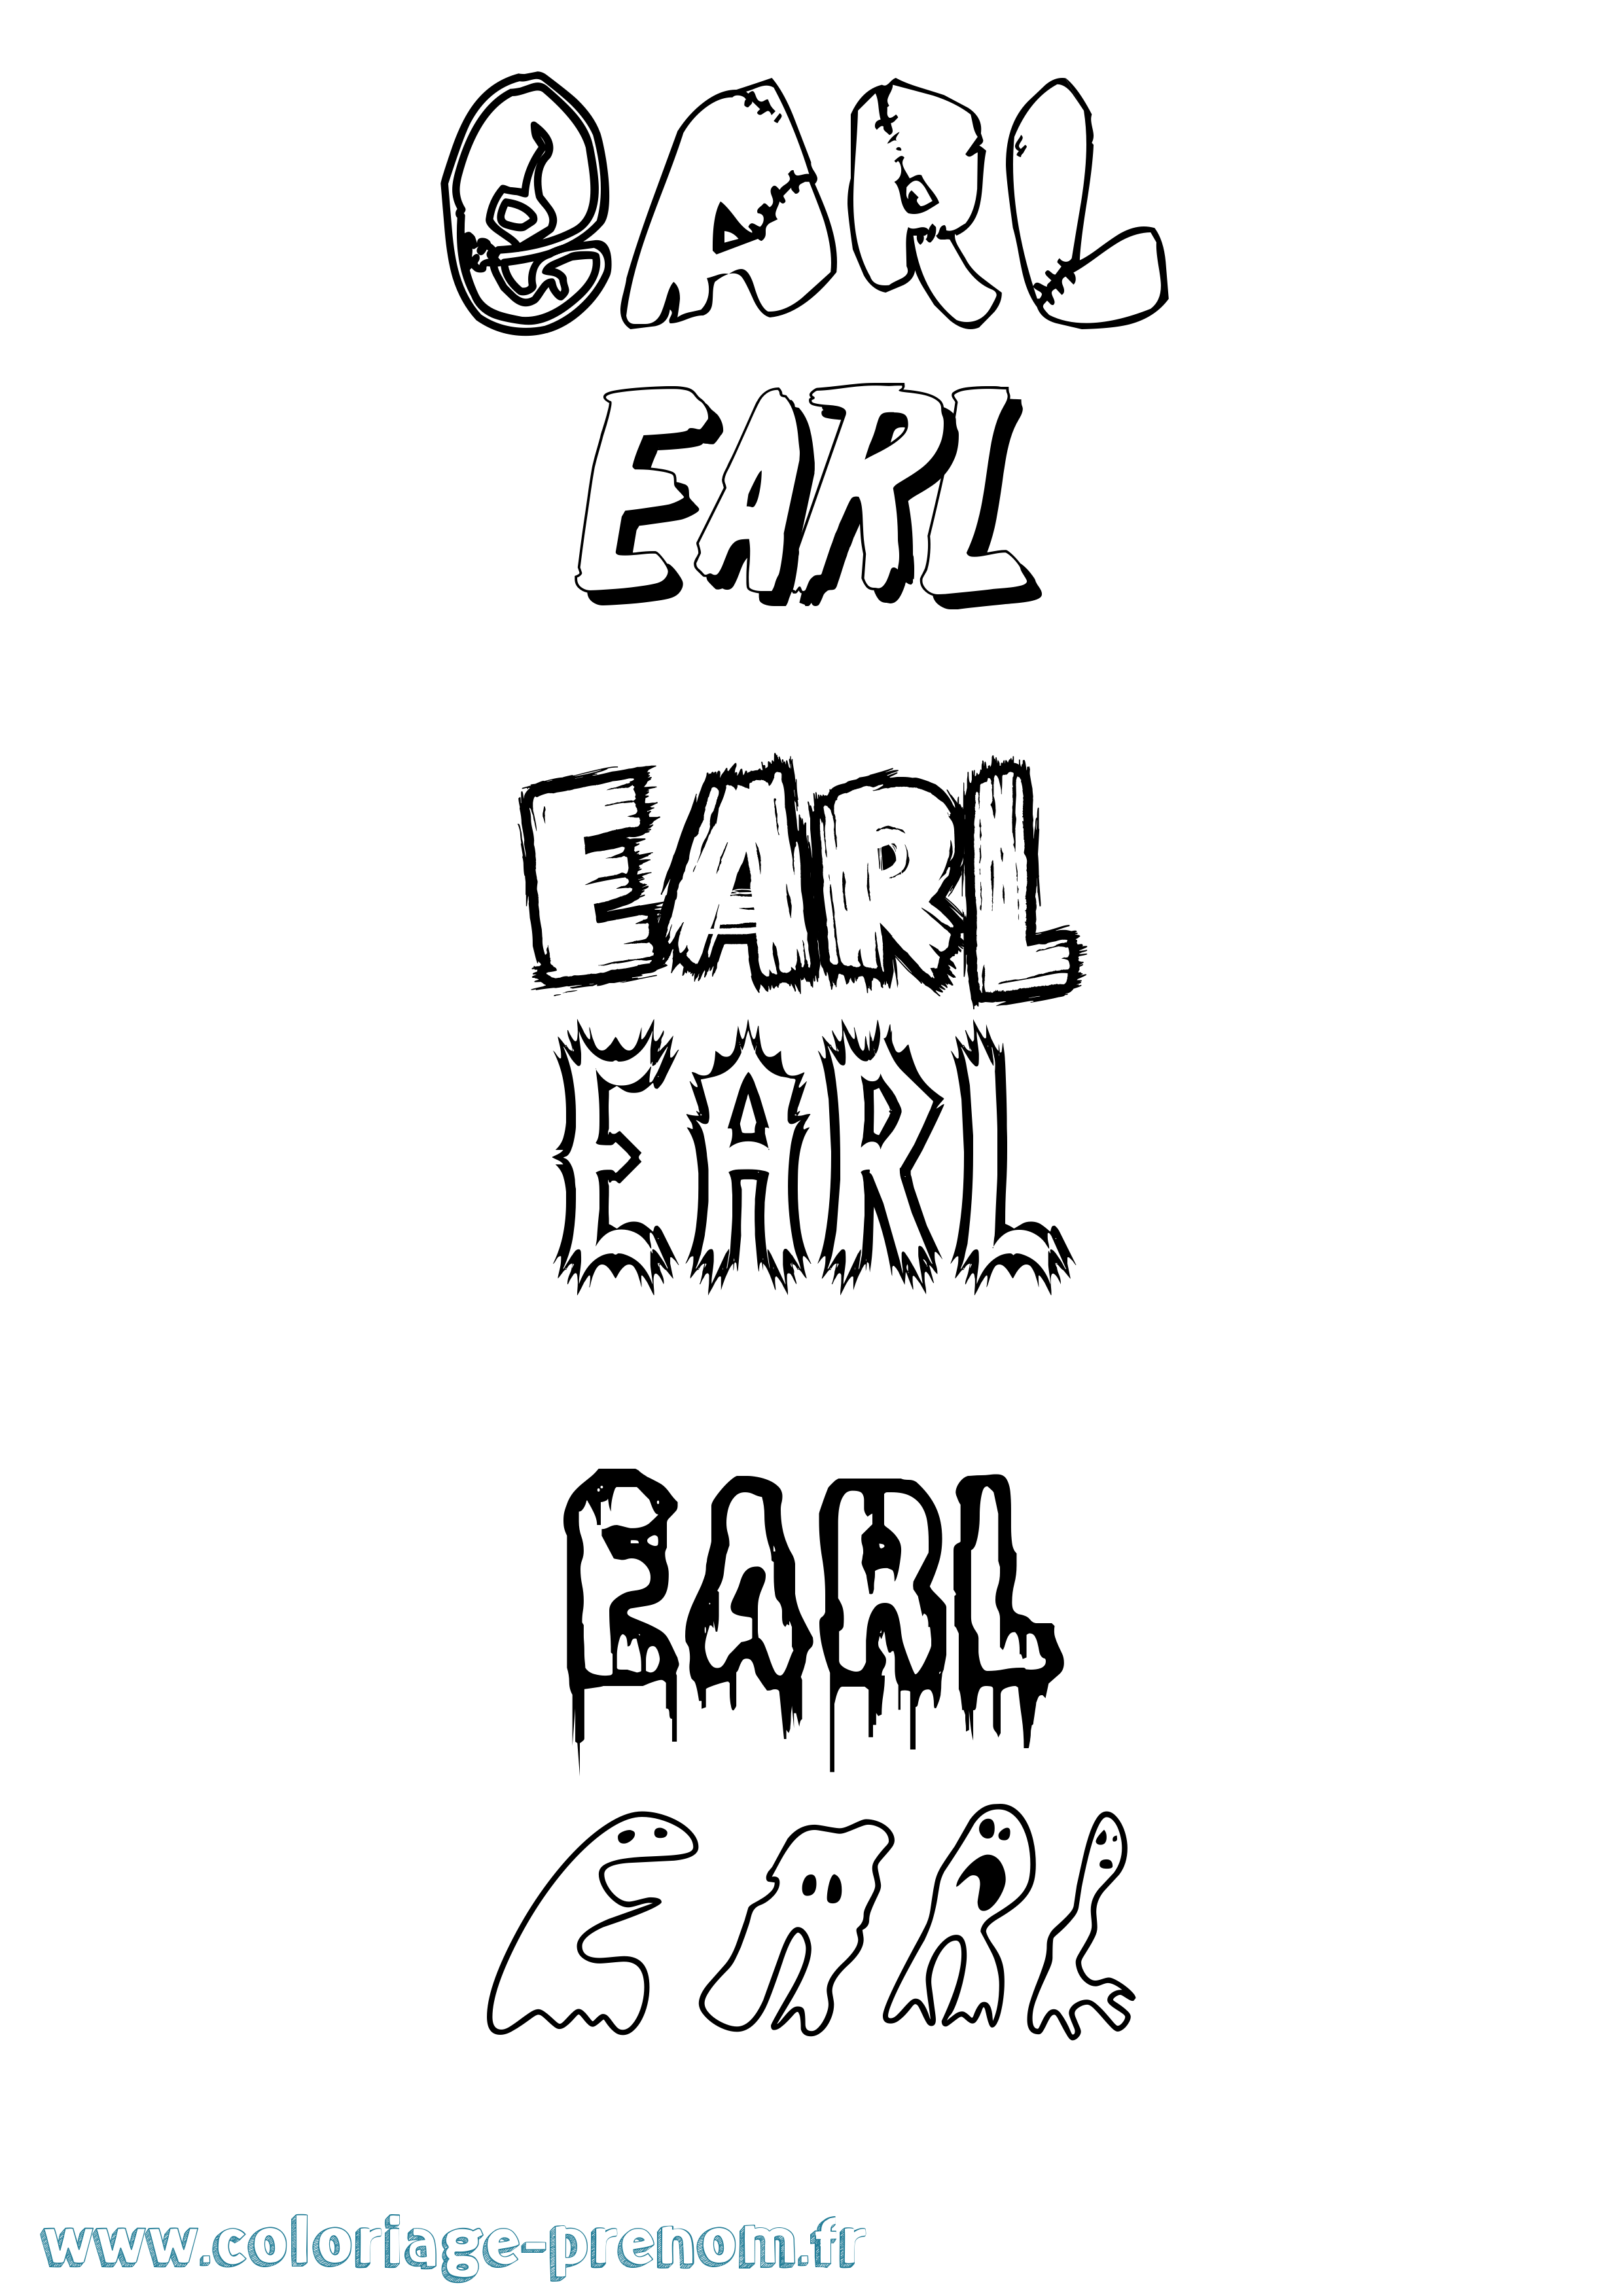 Coloriage prénom Earl Frisson